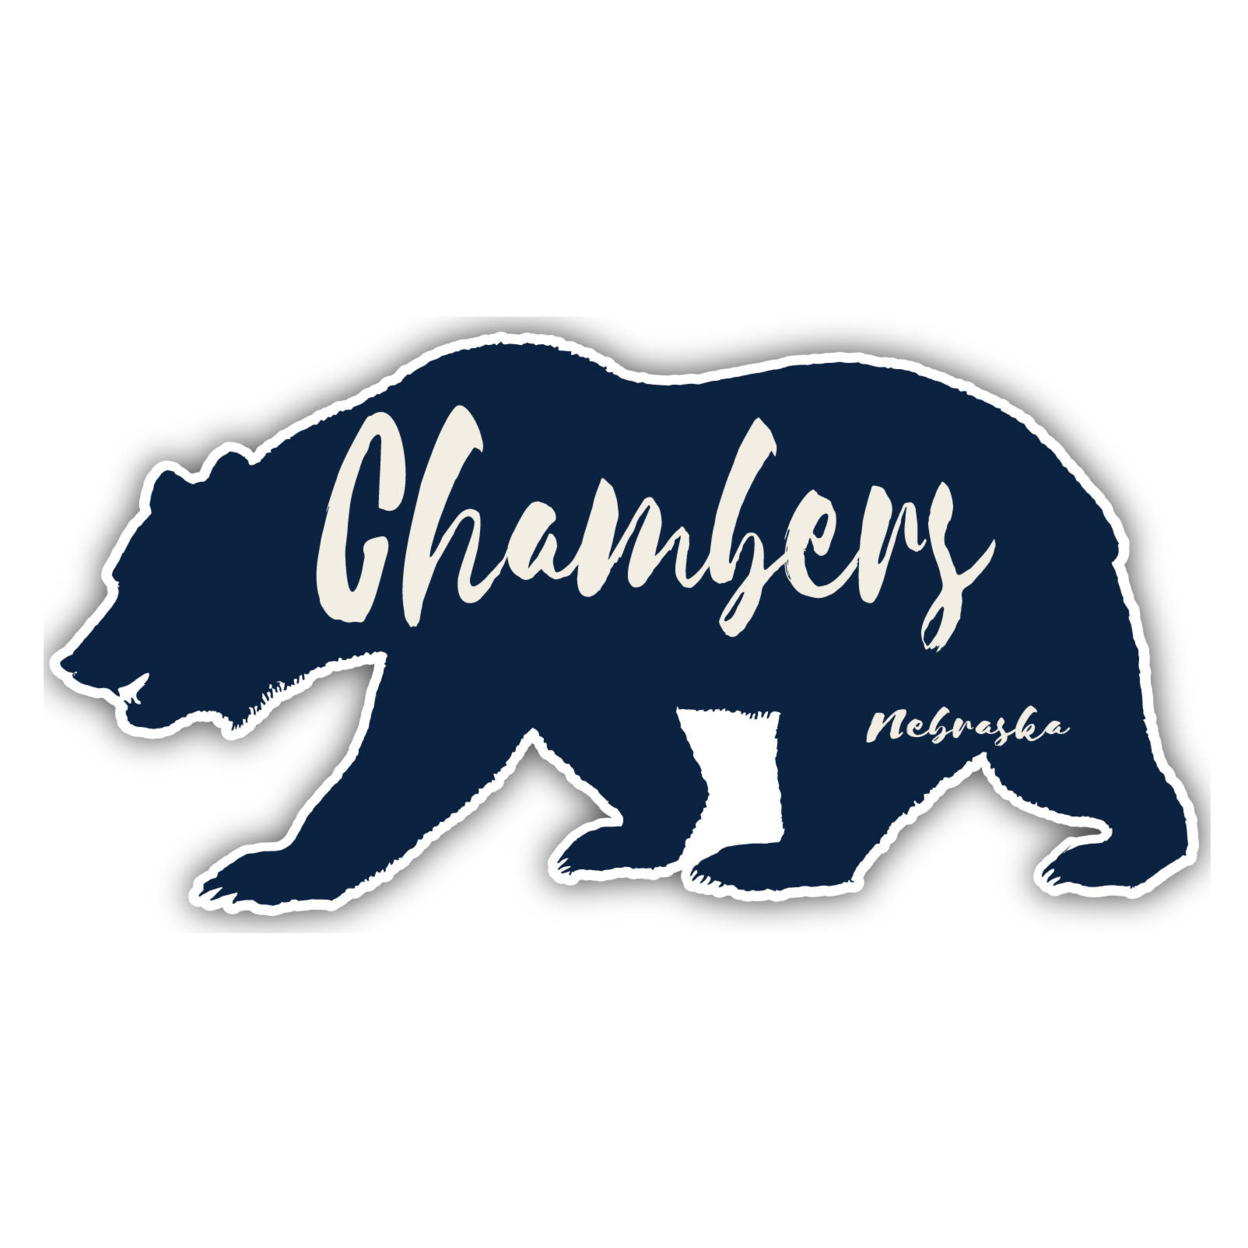 Chambers Nebraska Souvenir Decorative Stickers (Choose Theme And Size) - 4-Pack, 4-Inch, Bear